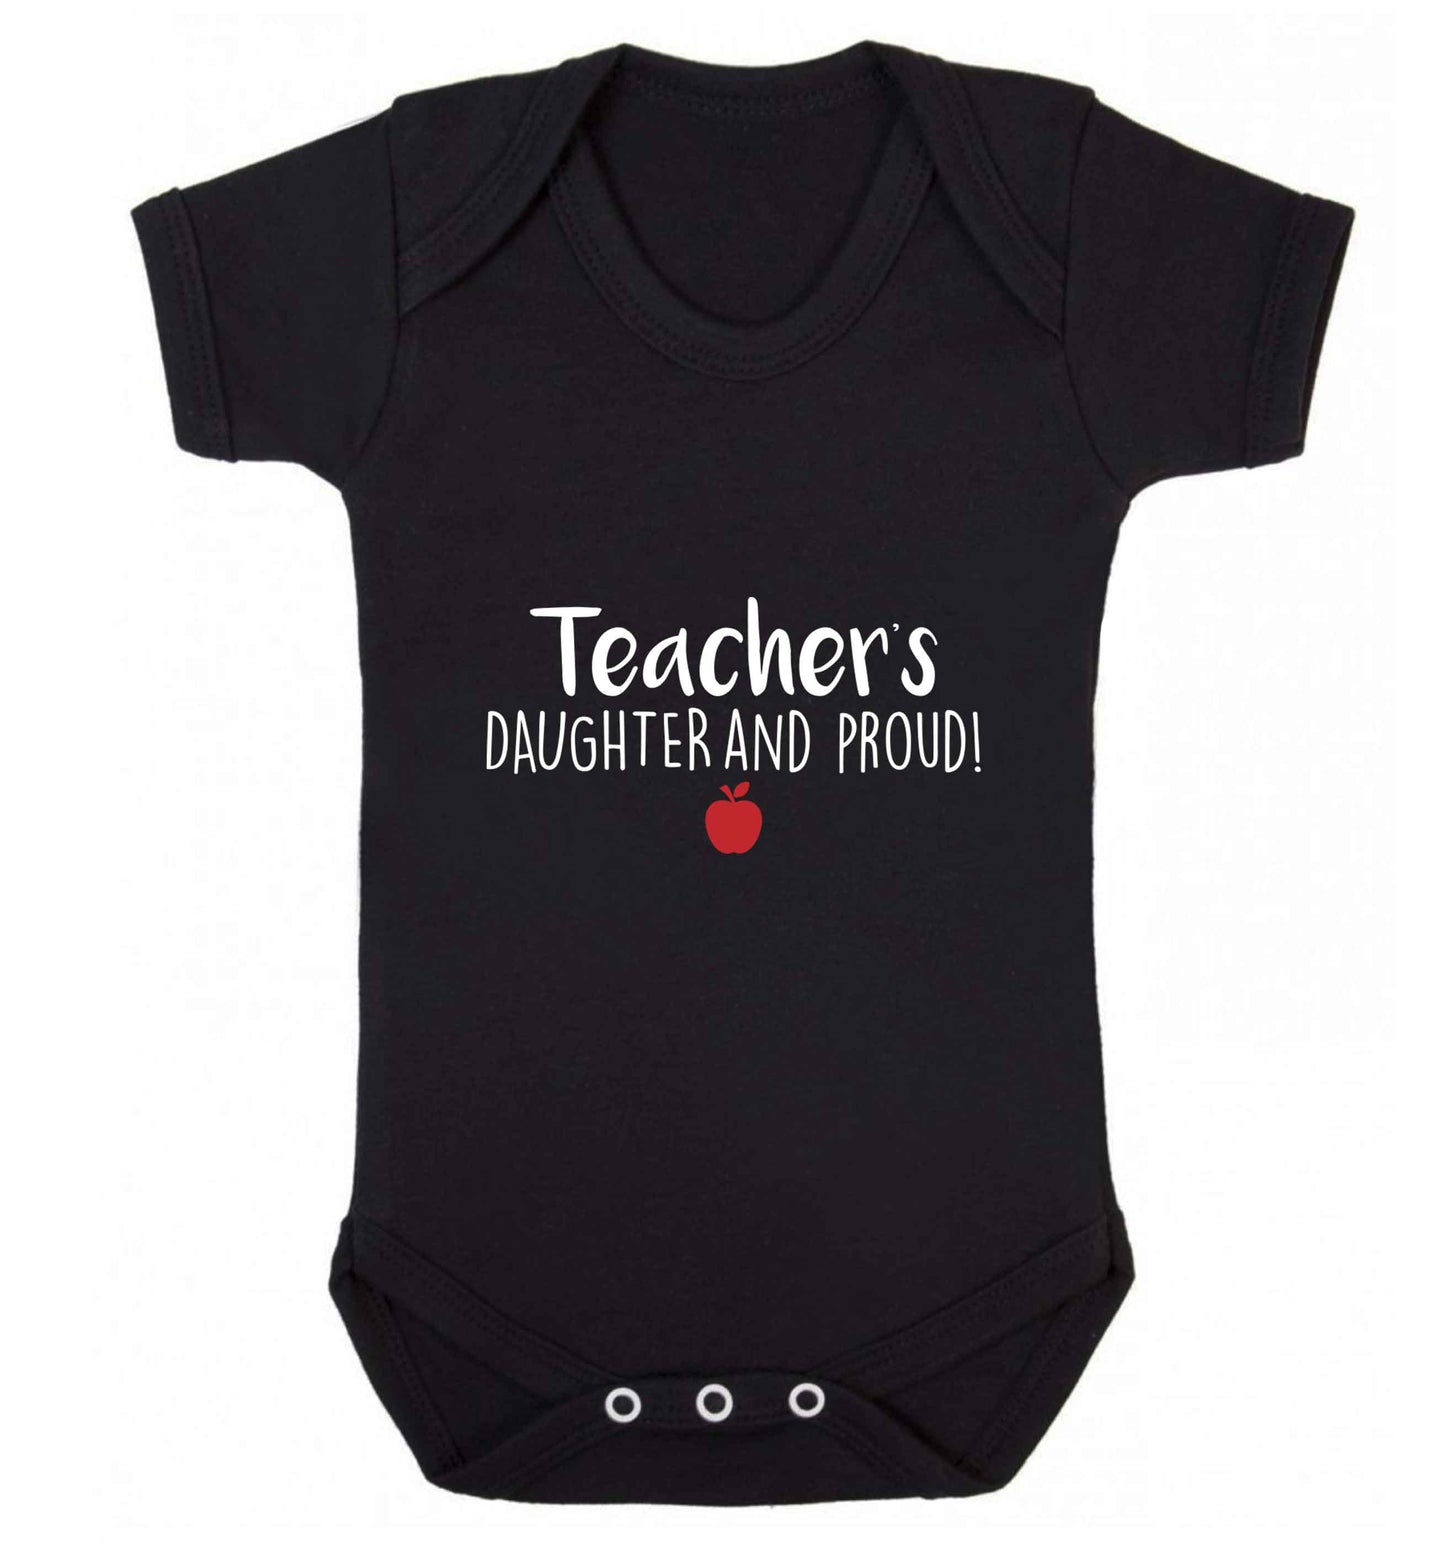 Teachers daughter and proud baby vest black 18-24 months